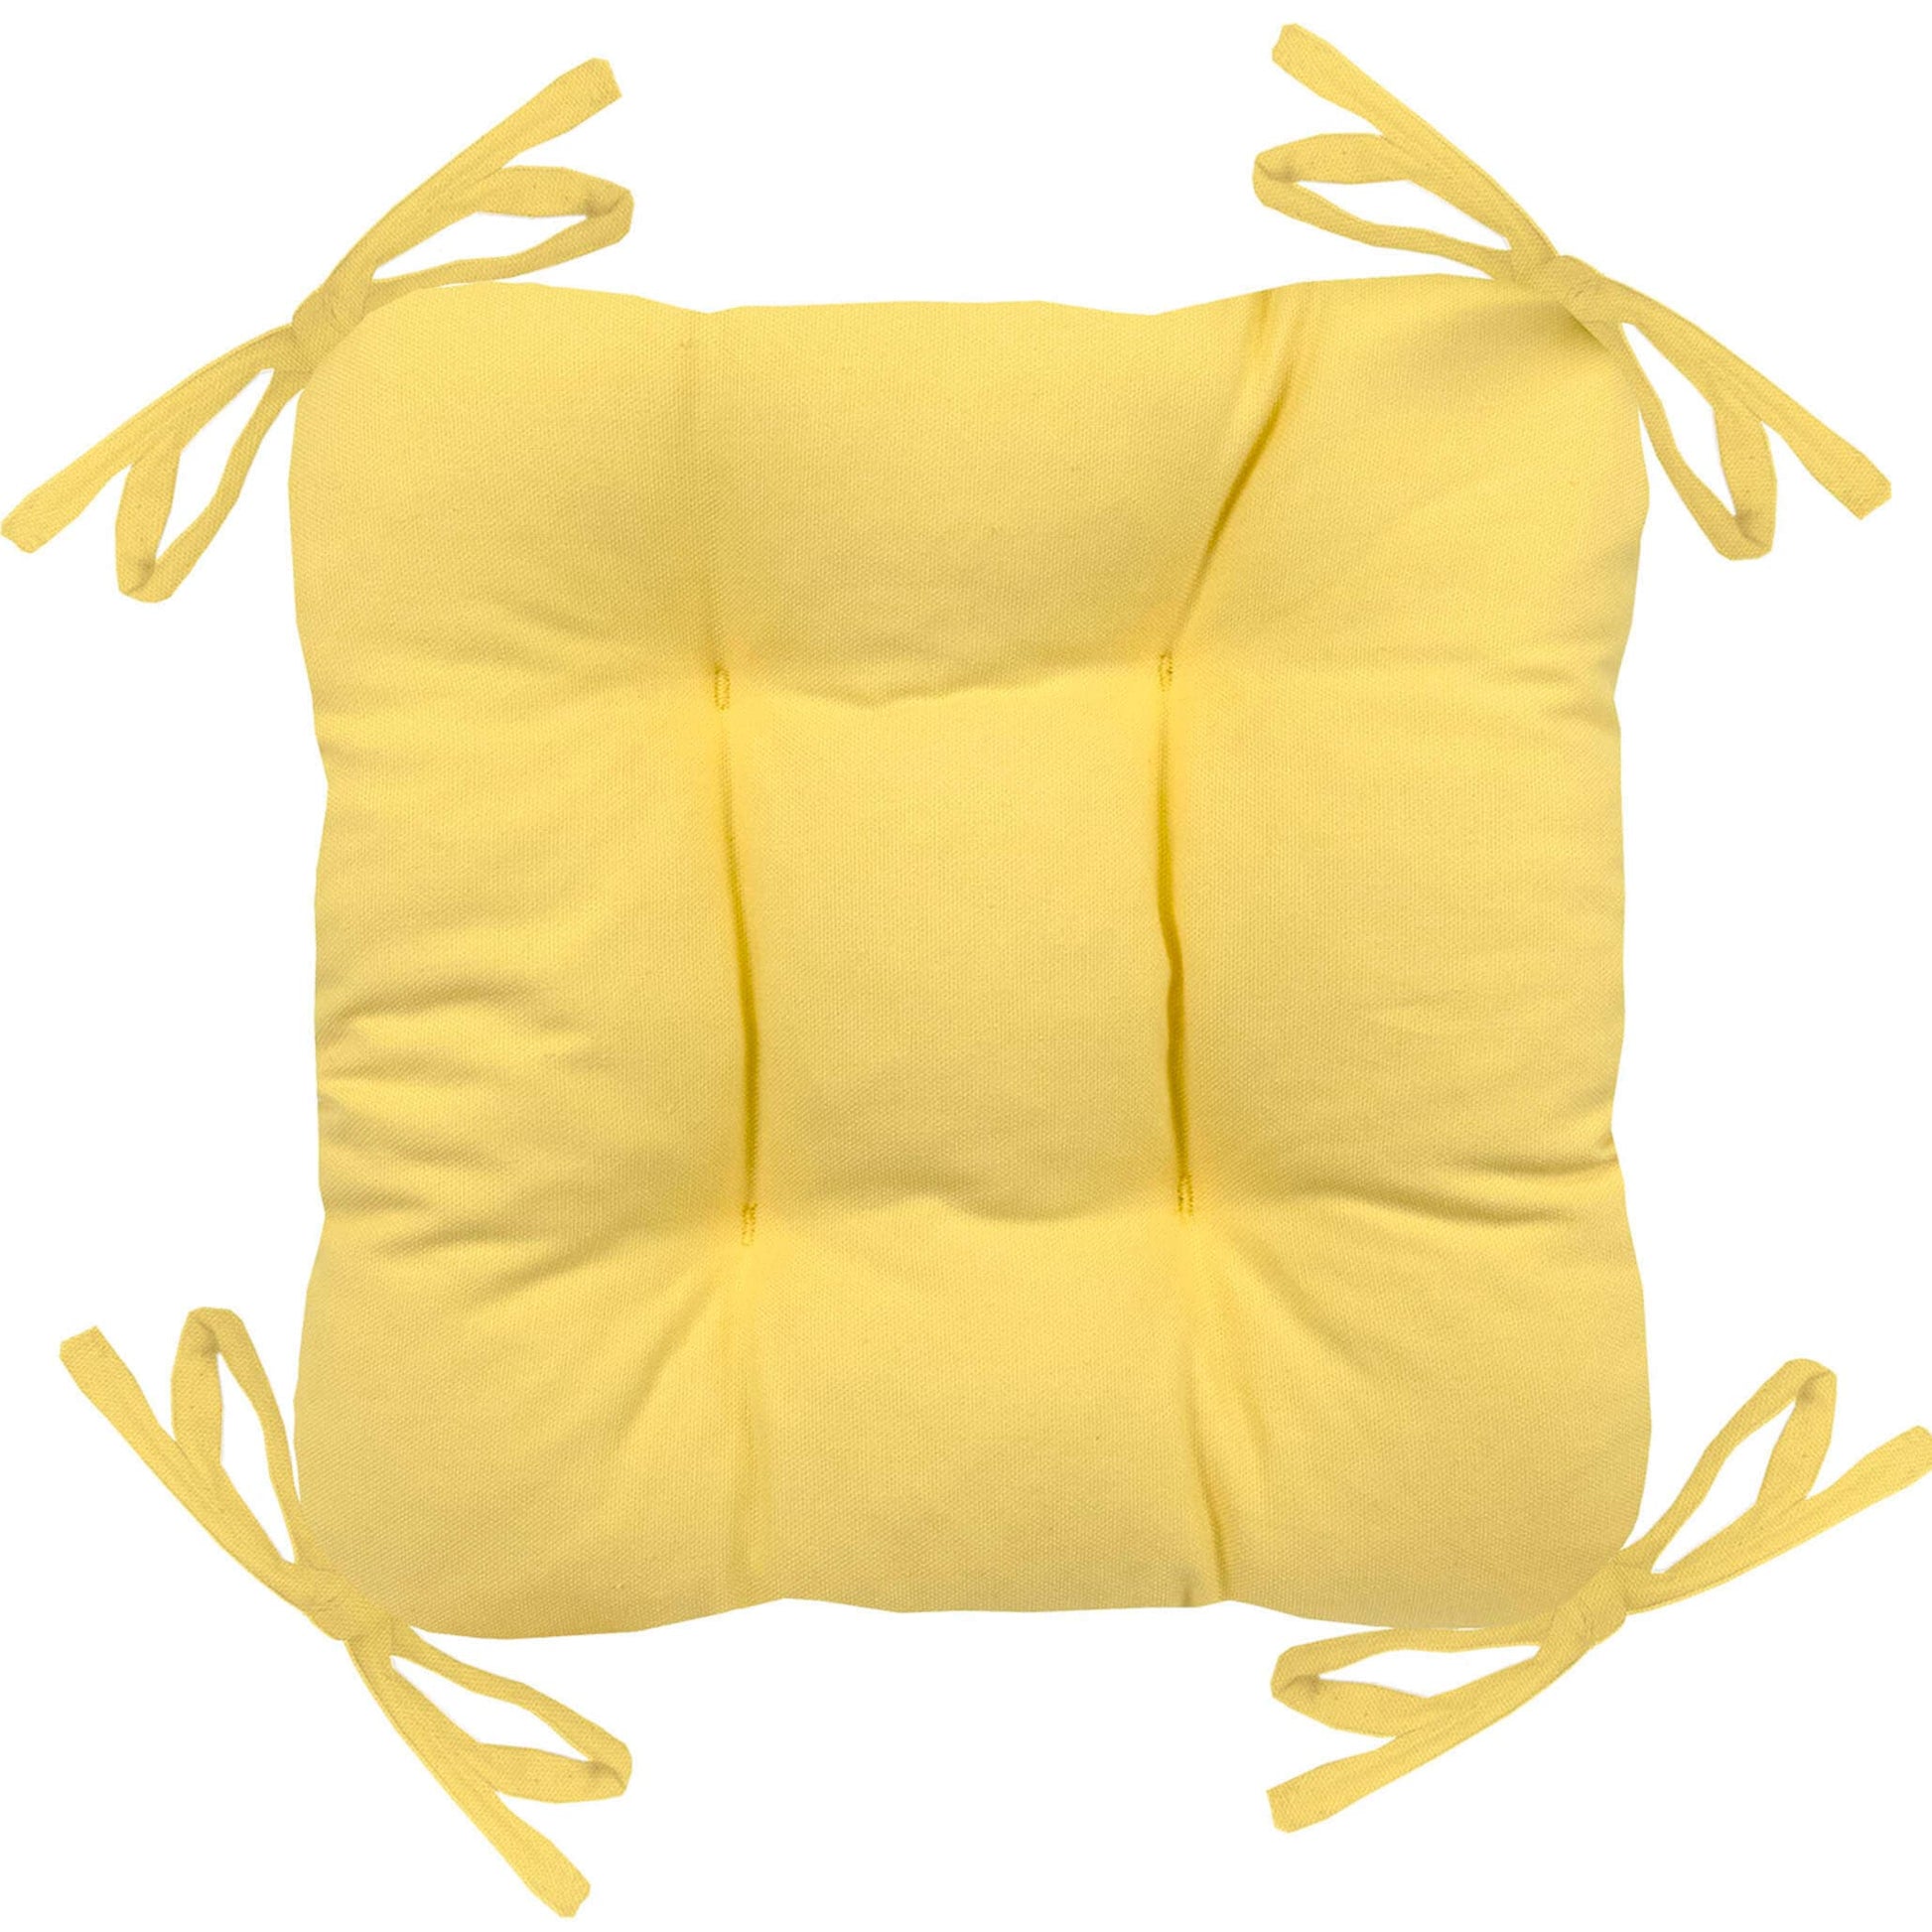 Cotton Duck Yellow Square Industrial Bar Stool Cushion - Latex Foam Fill - Barnett Home Decor 